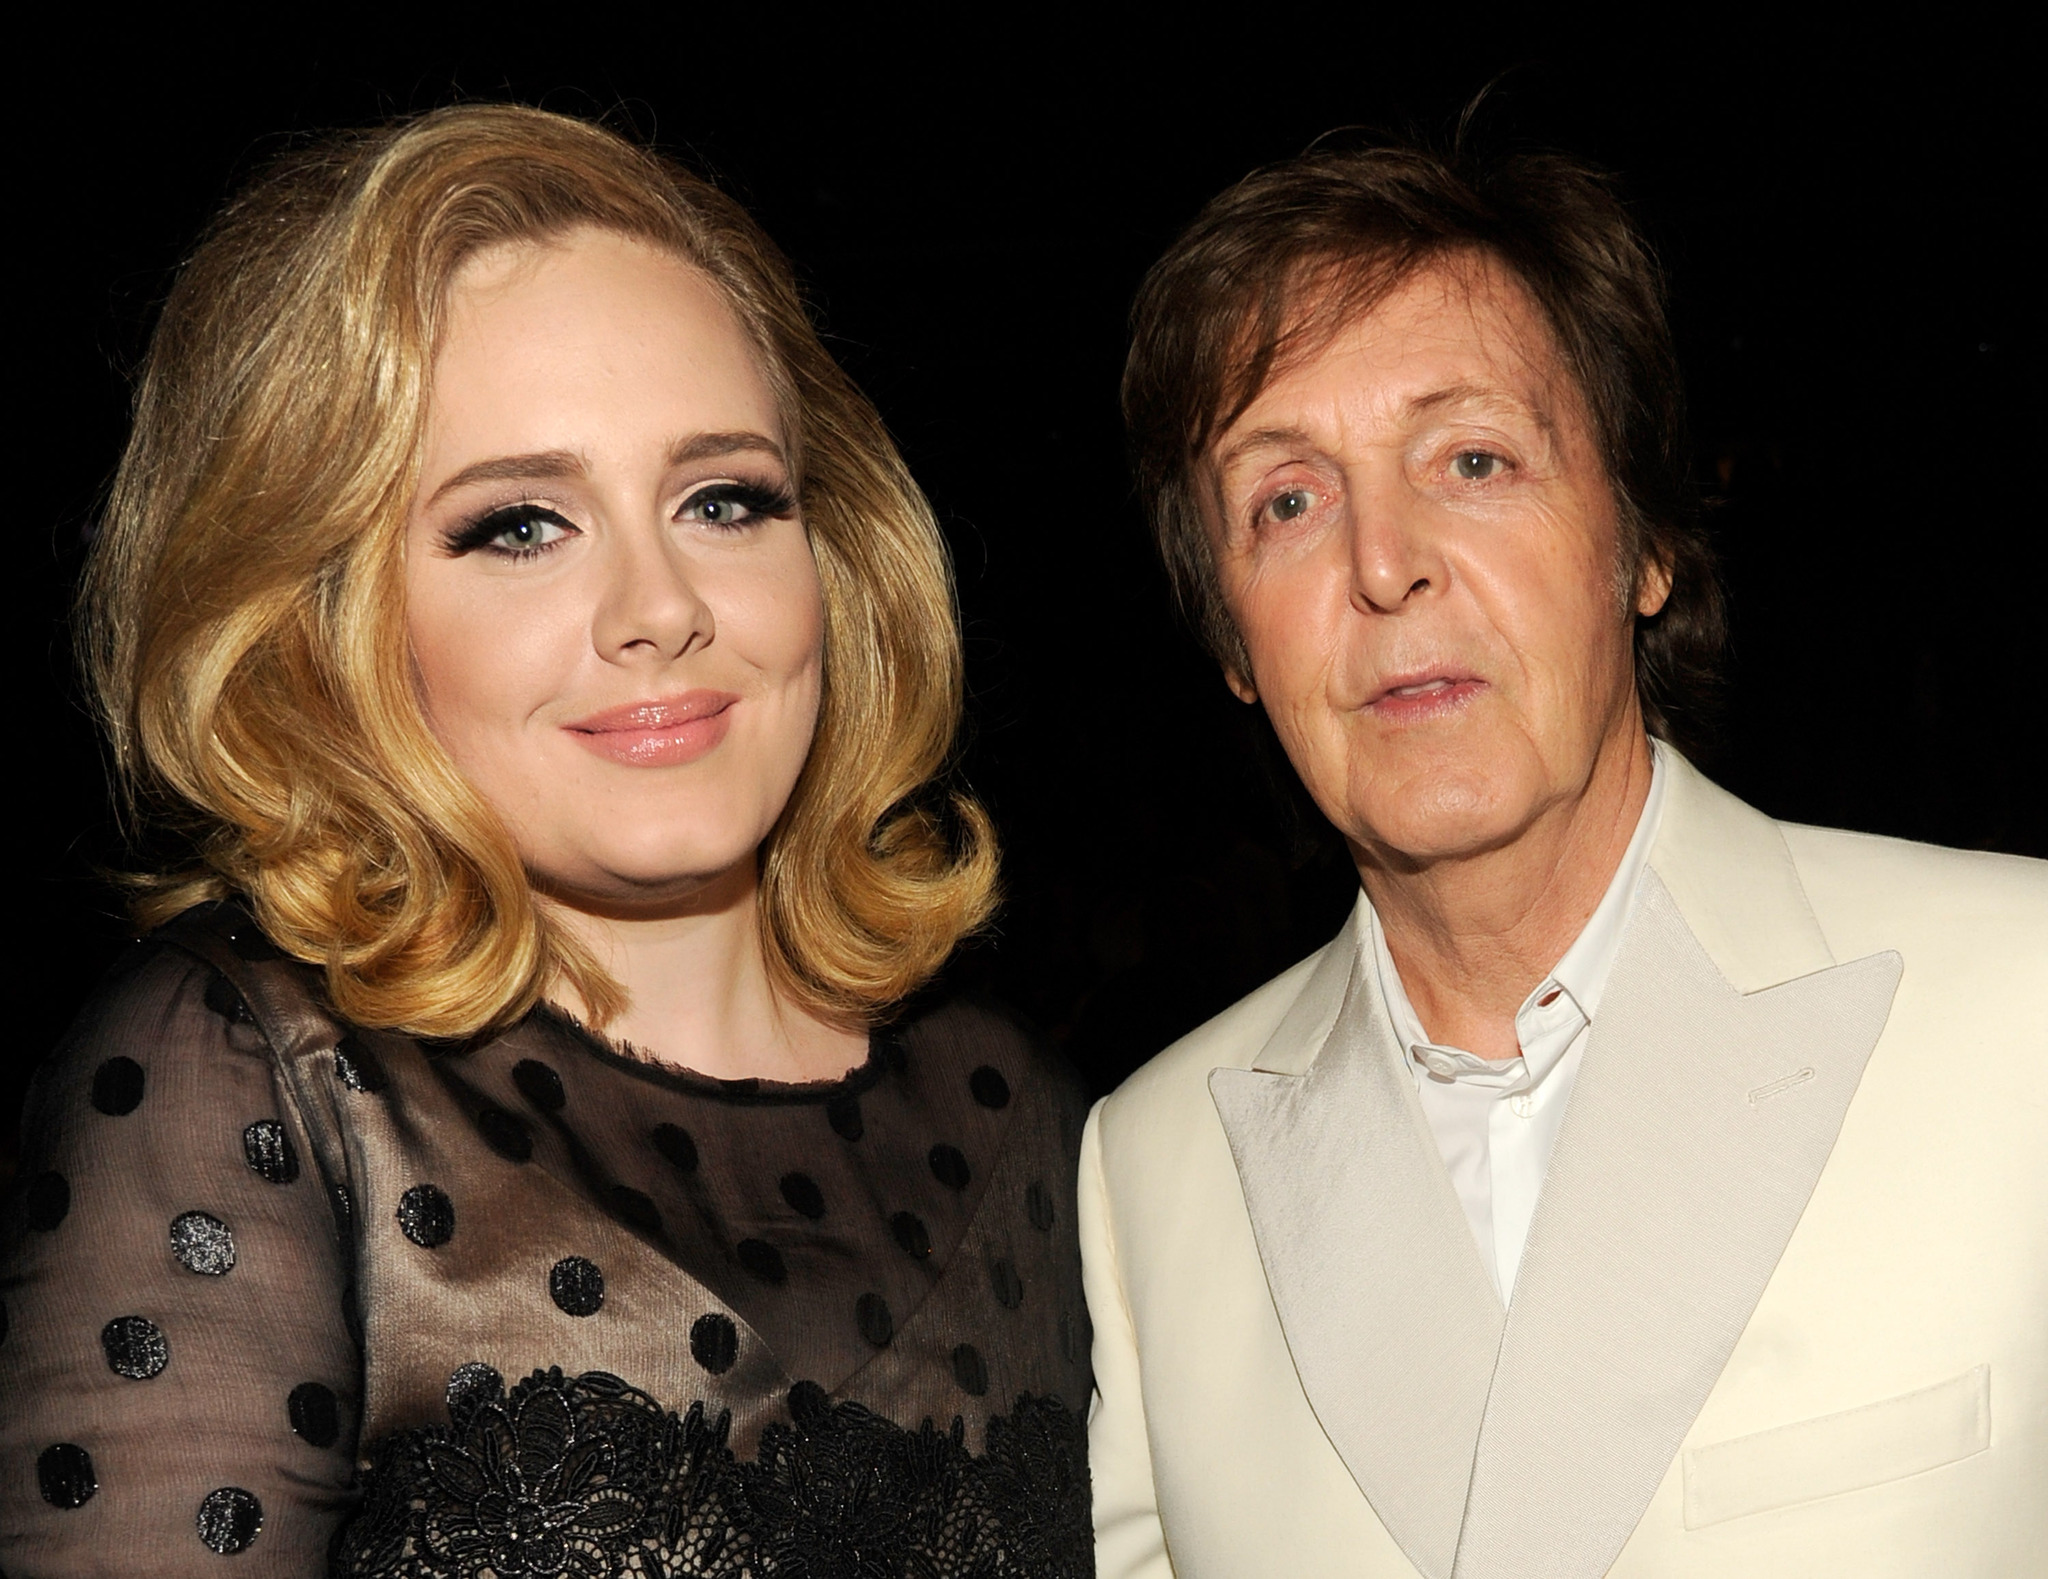 Paul McCartney and Adele